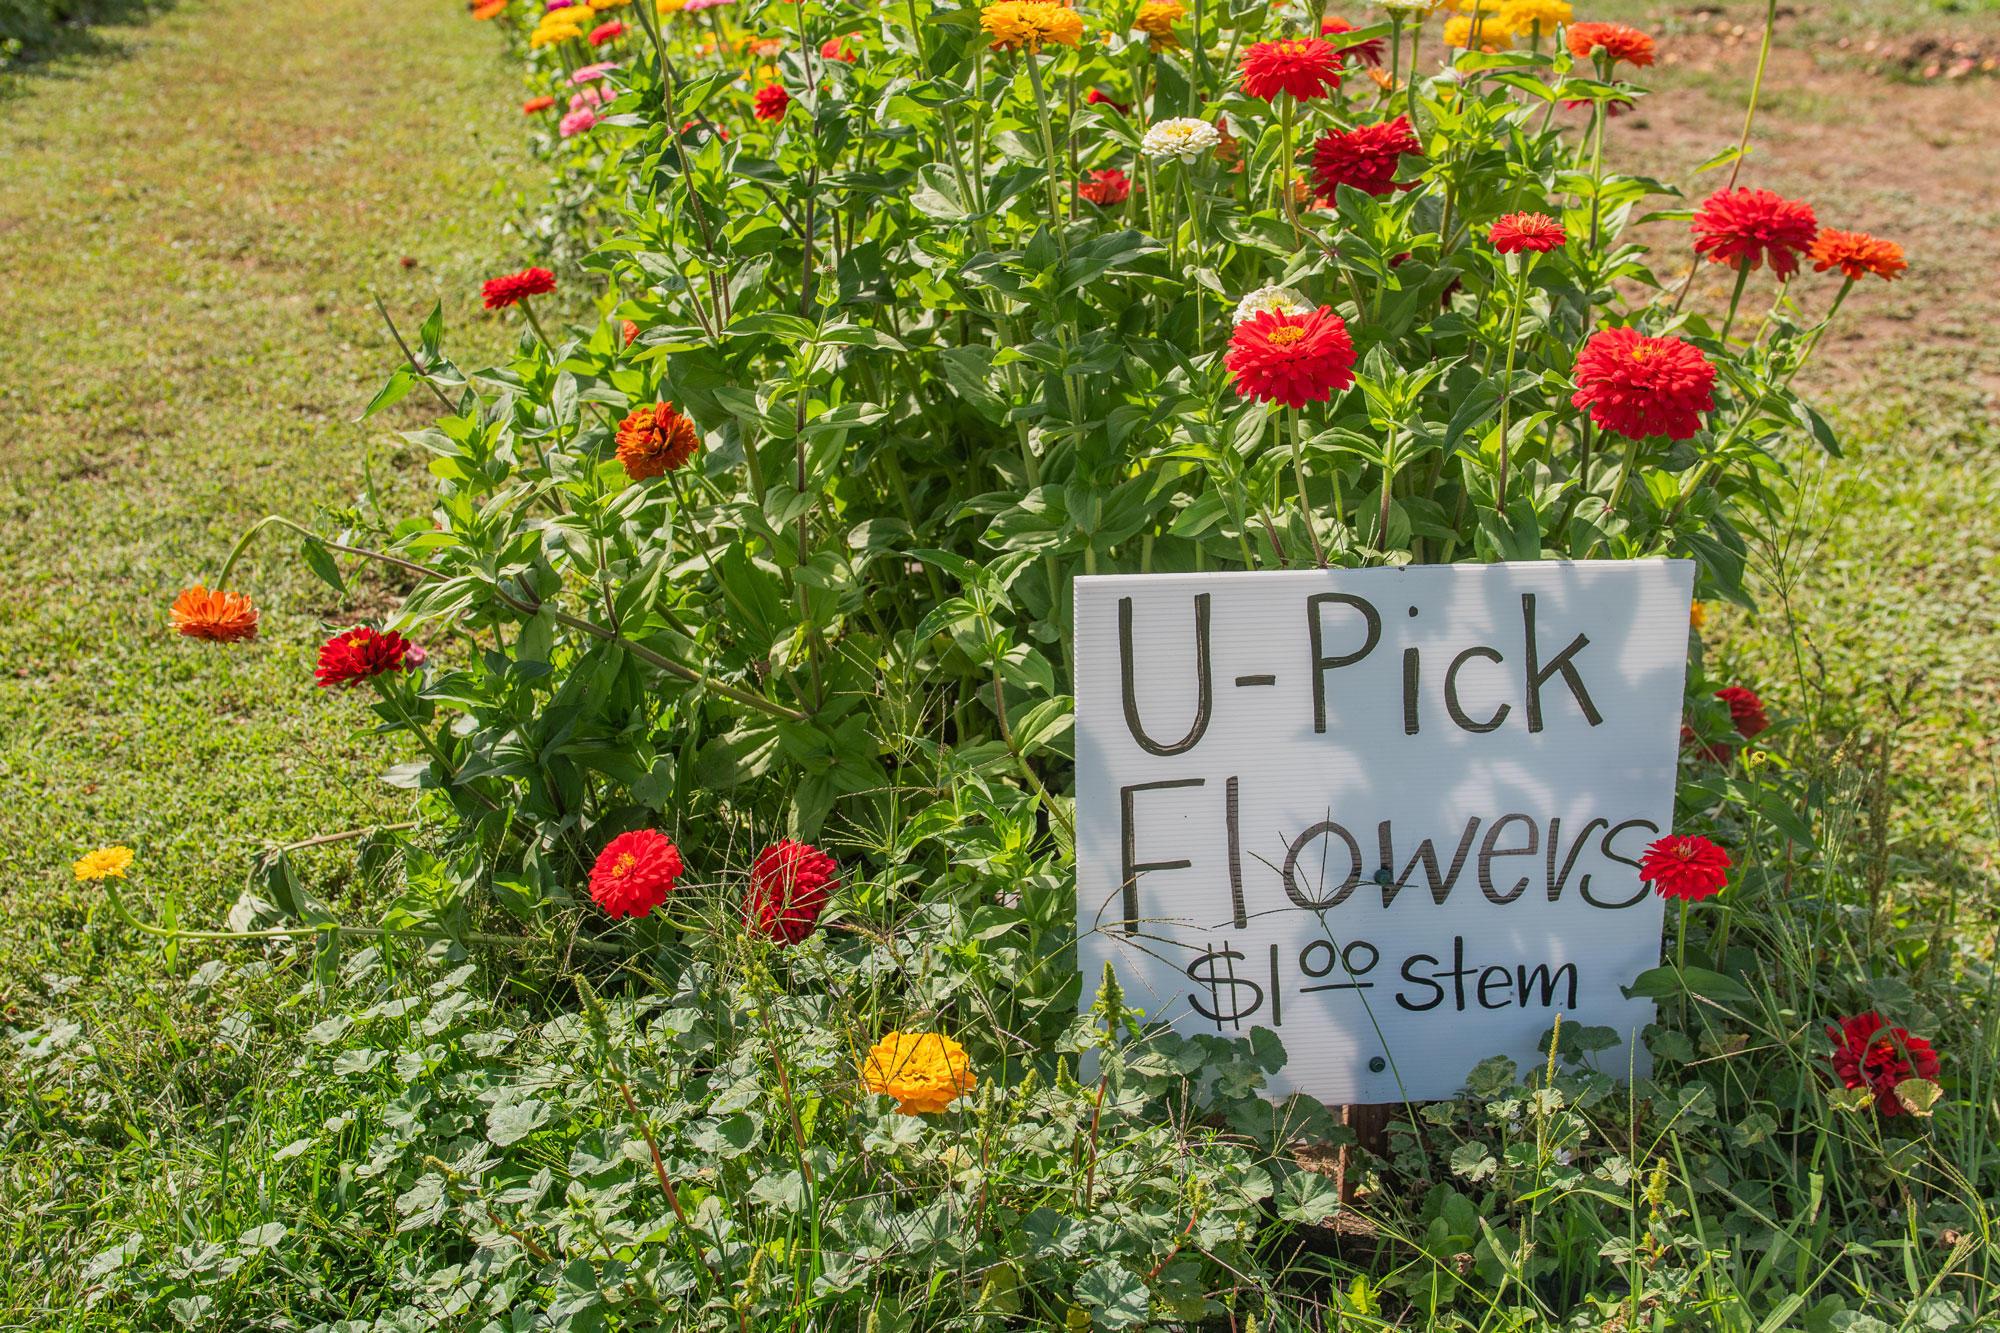 U-pick flowers at a Willamette Valley farm.